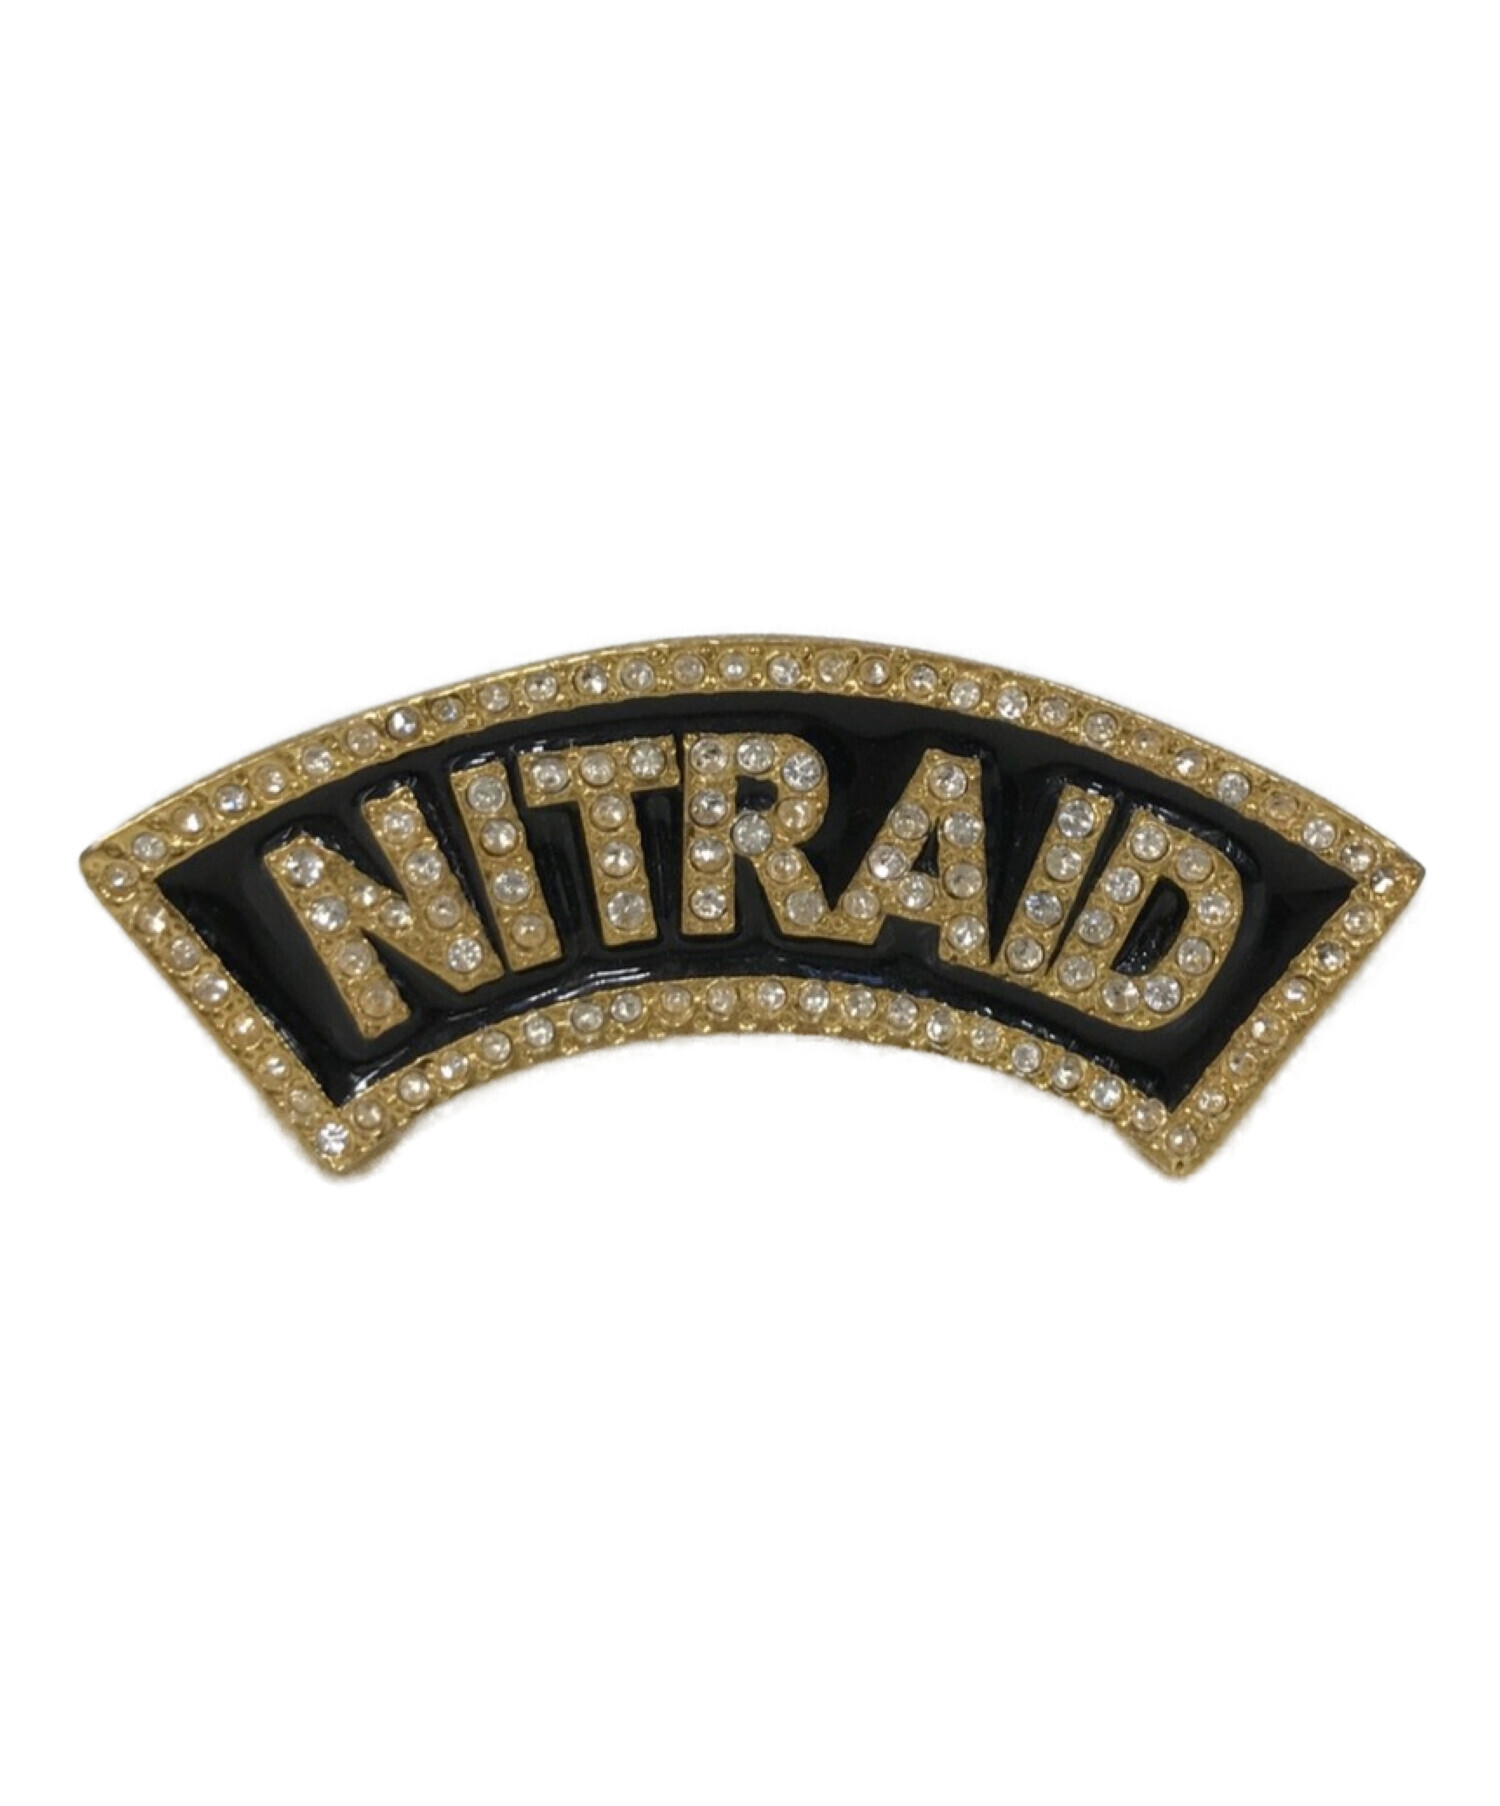 NITRAID (ナイトレイド) リング サイズ:21号